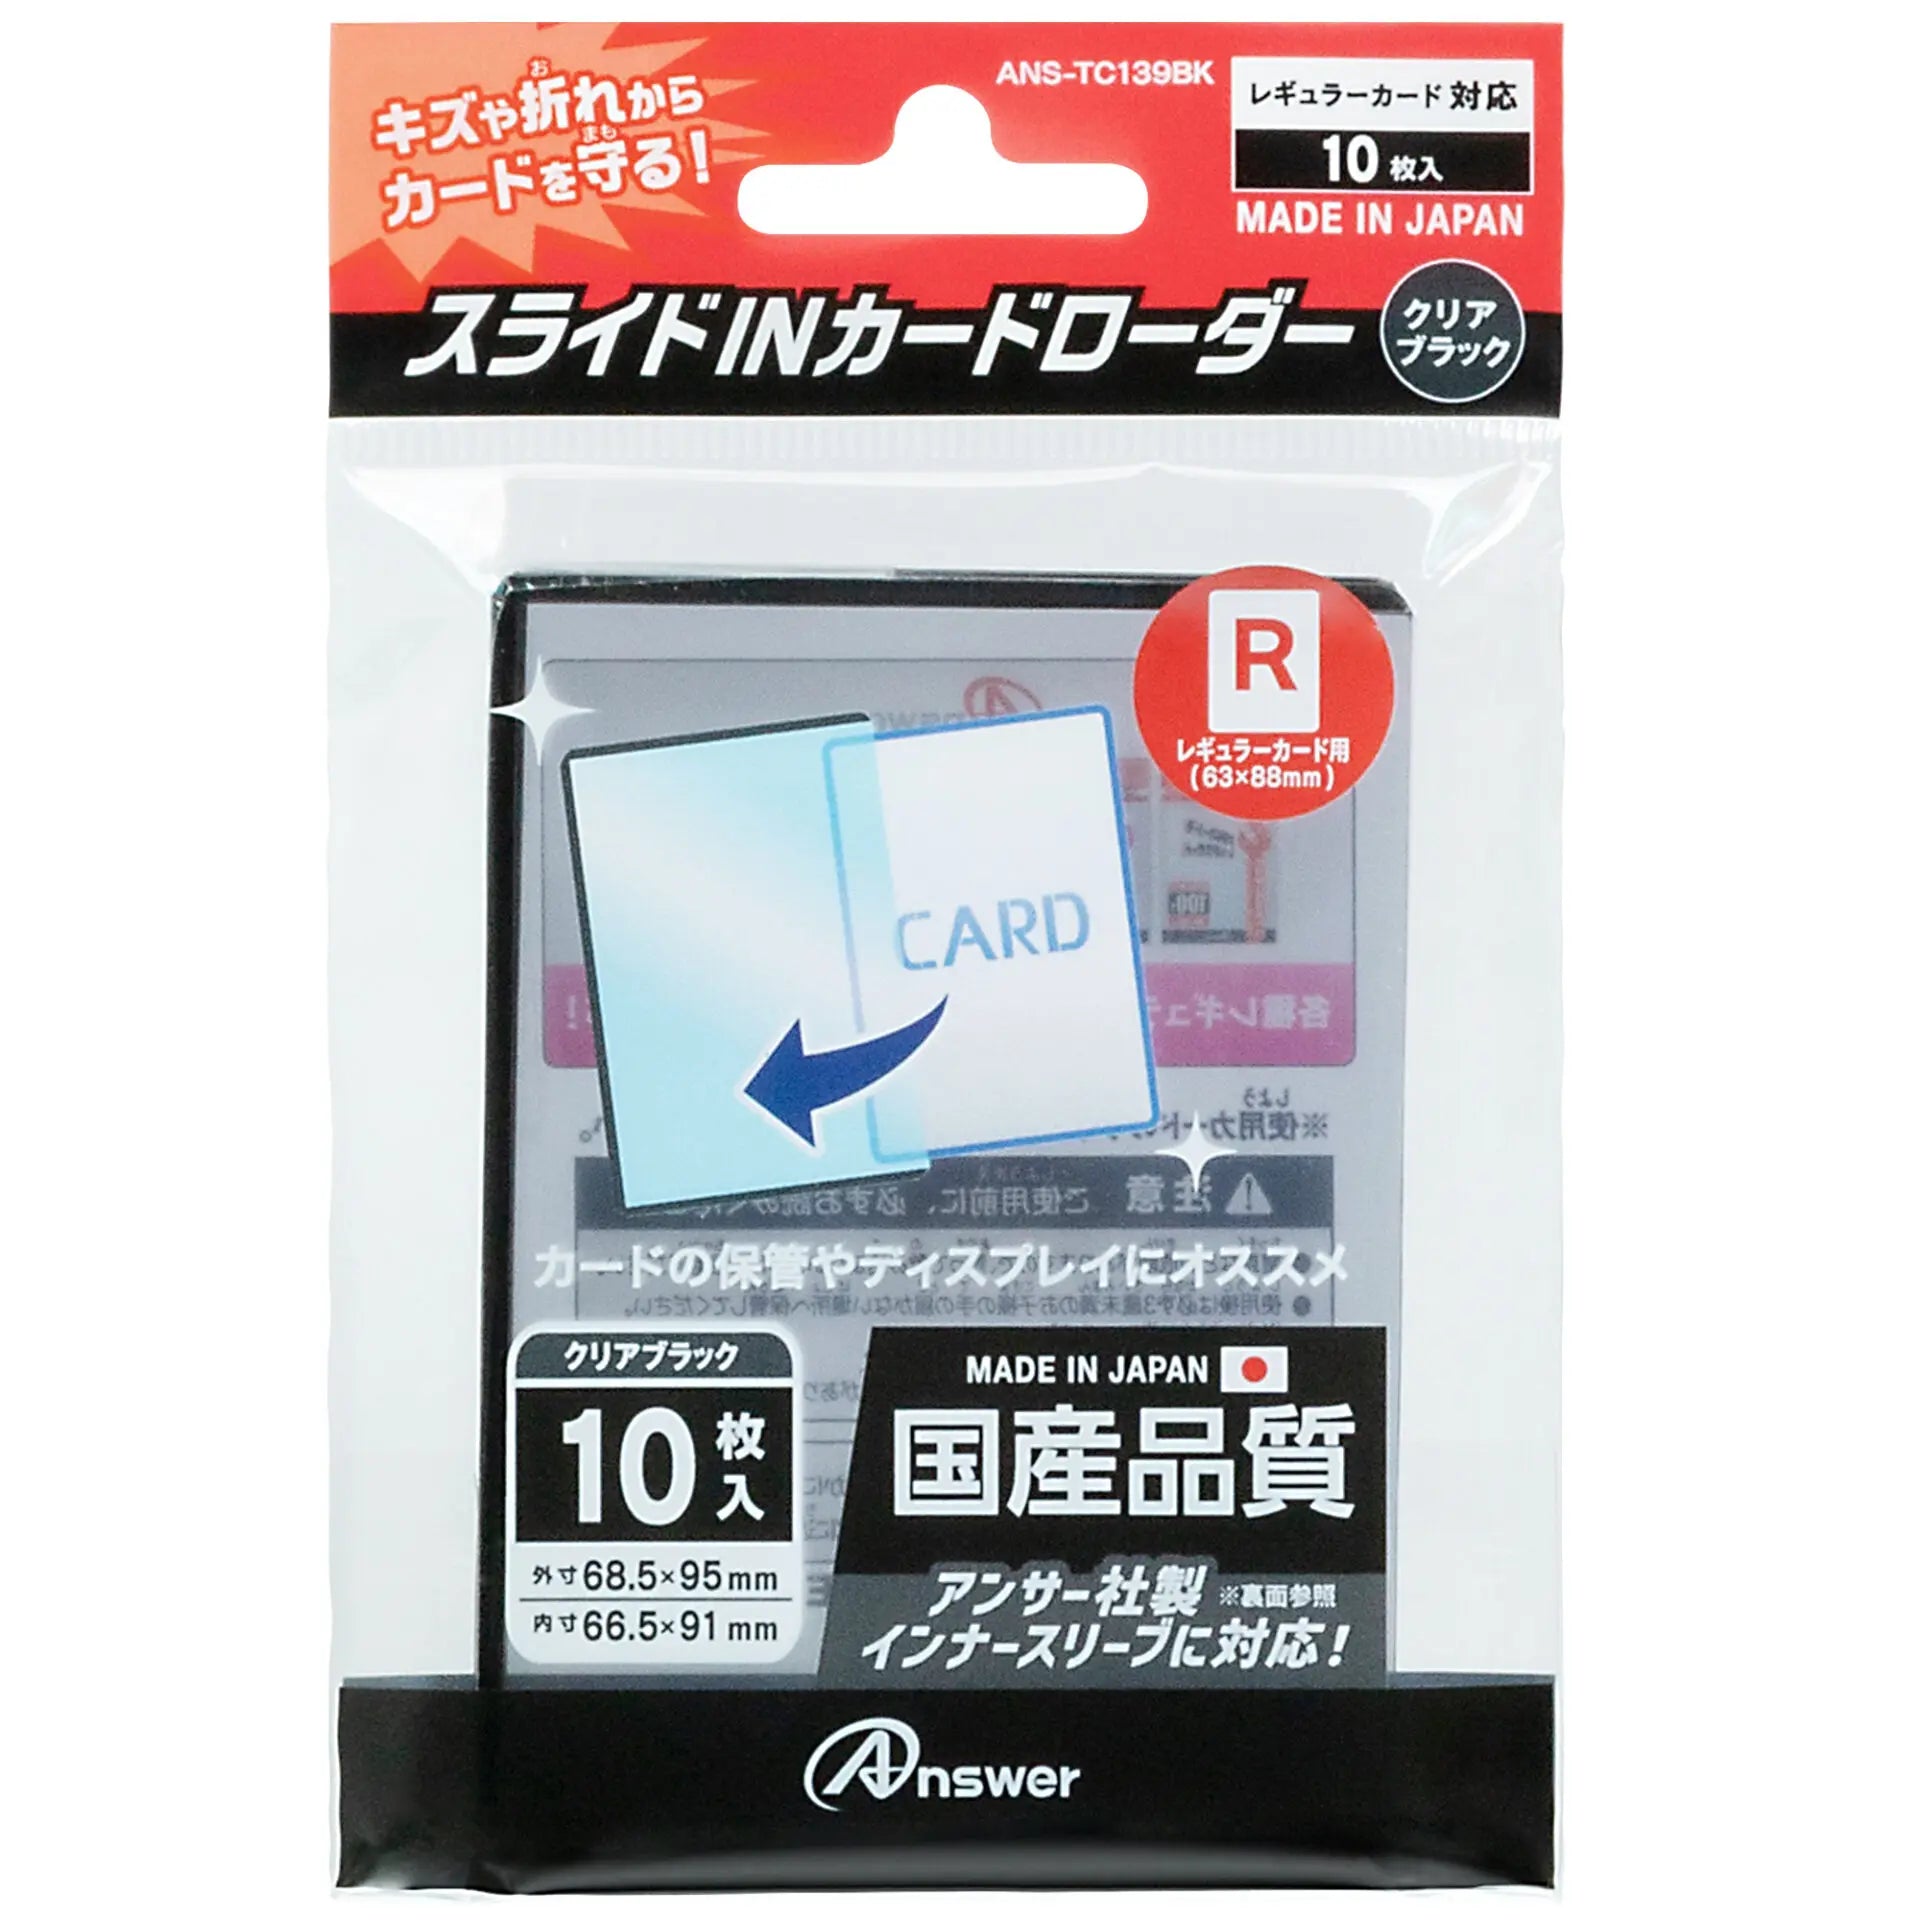 Answer for regular card SLIDE IN CARD LOADER Clear Black  For standard card size (66 x 88 mm) / 10 loaders.  Inside size: 66.5 x 91 mm  Outside size: 68.5 x 95 mm